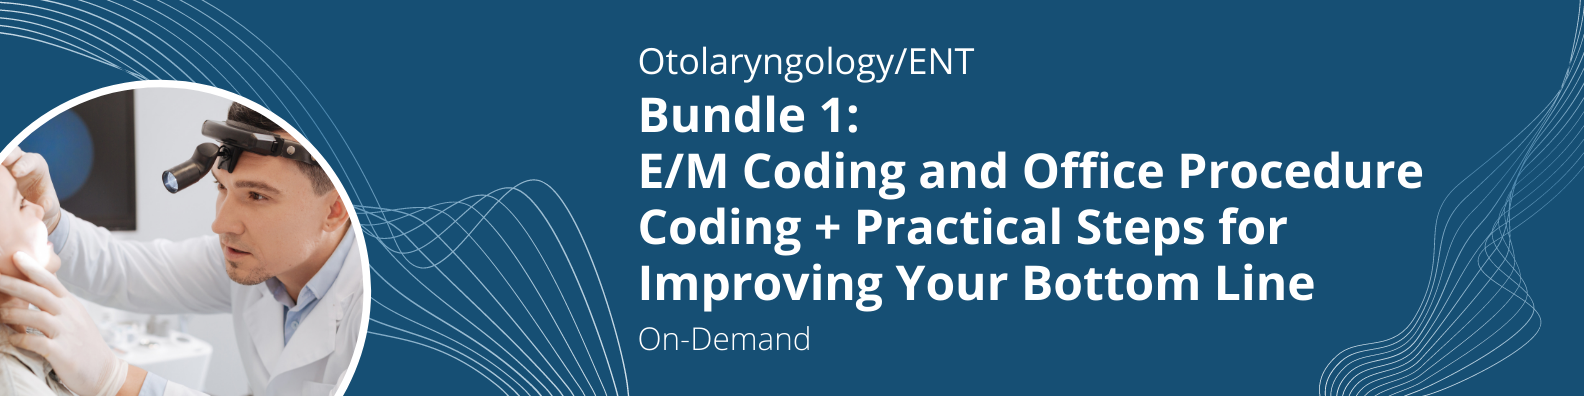 On-Demand - Bundle 1: E/M Coding & Office Procedure Coding + Practical Steps for Improving Your Bottom Line